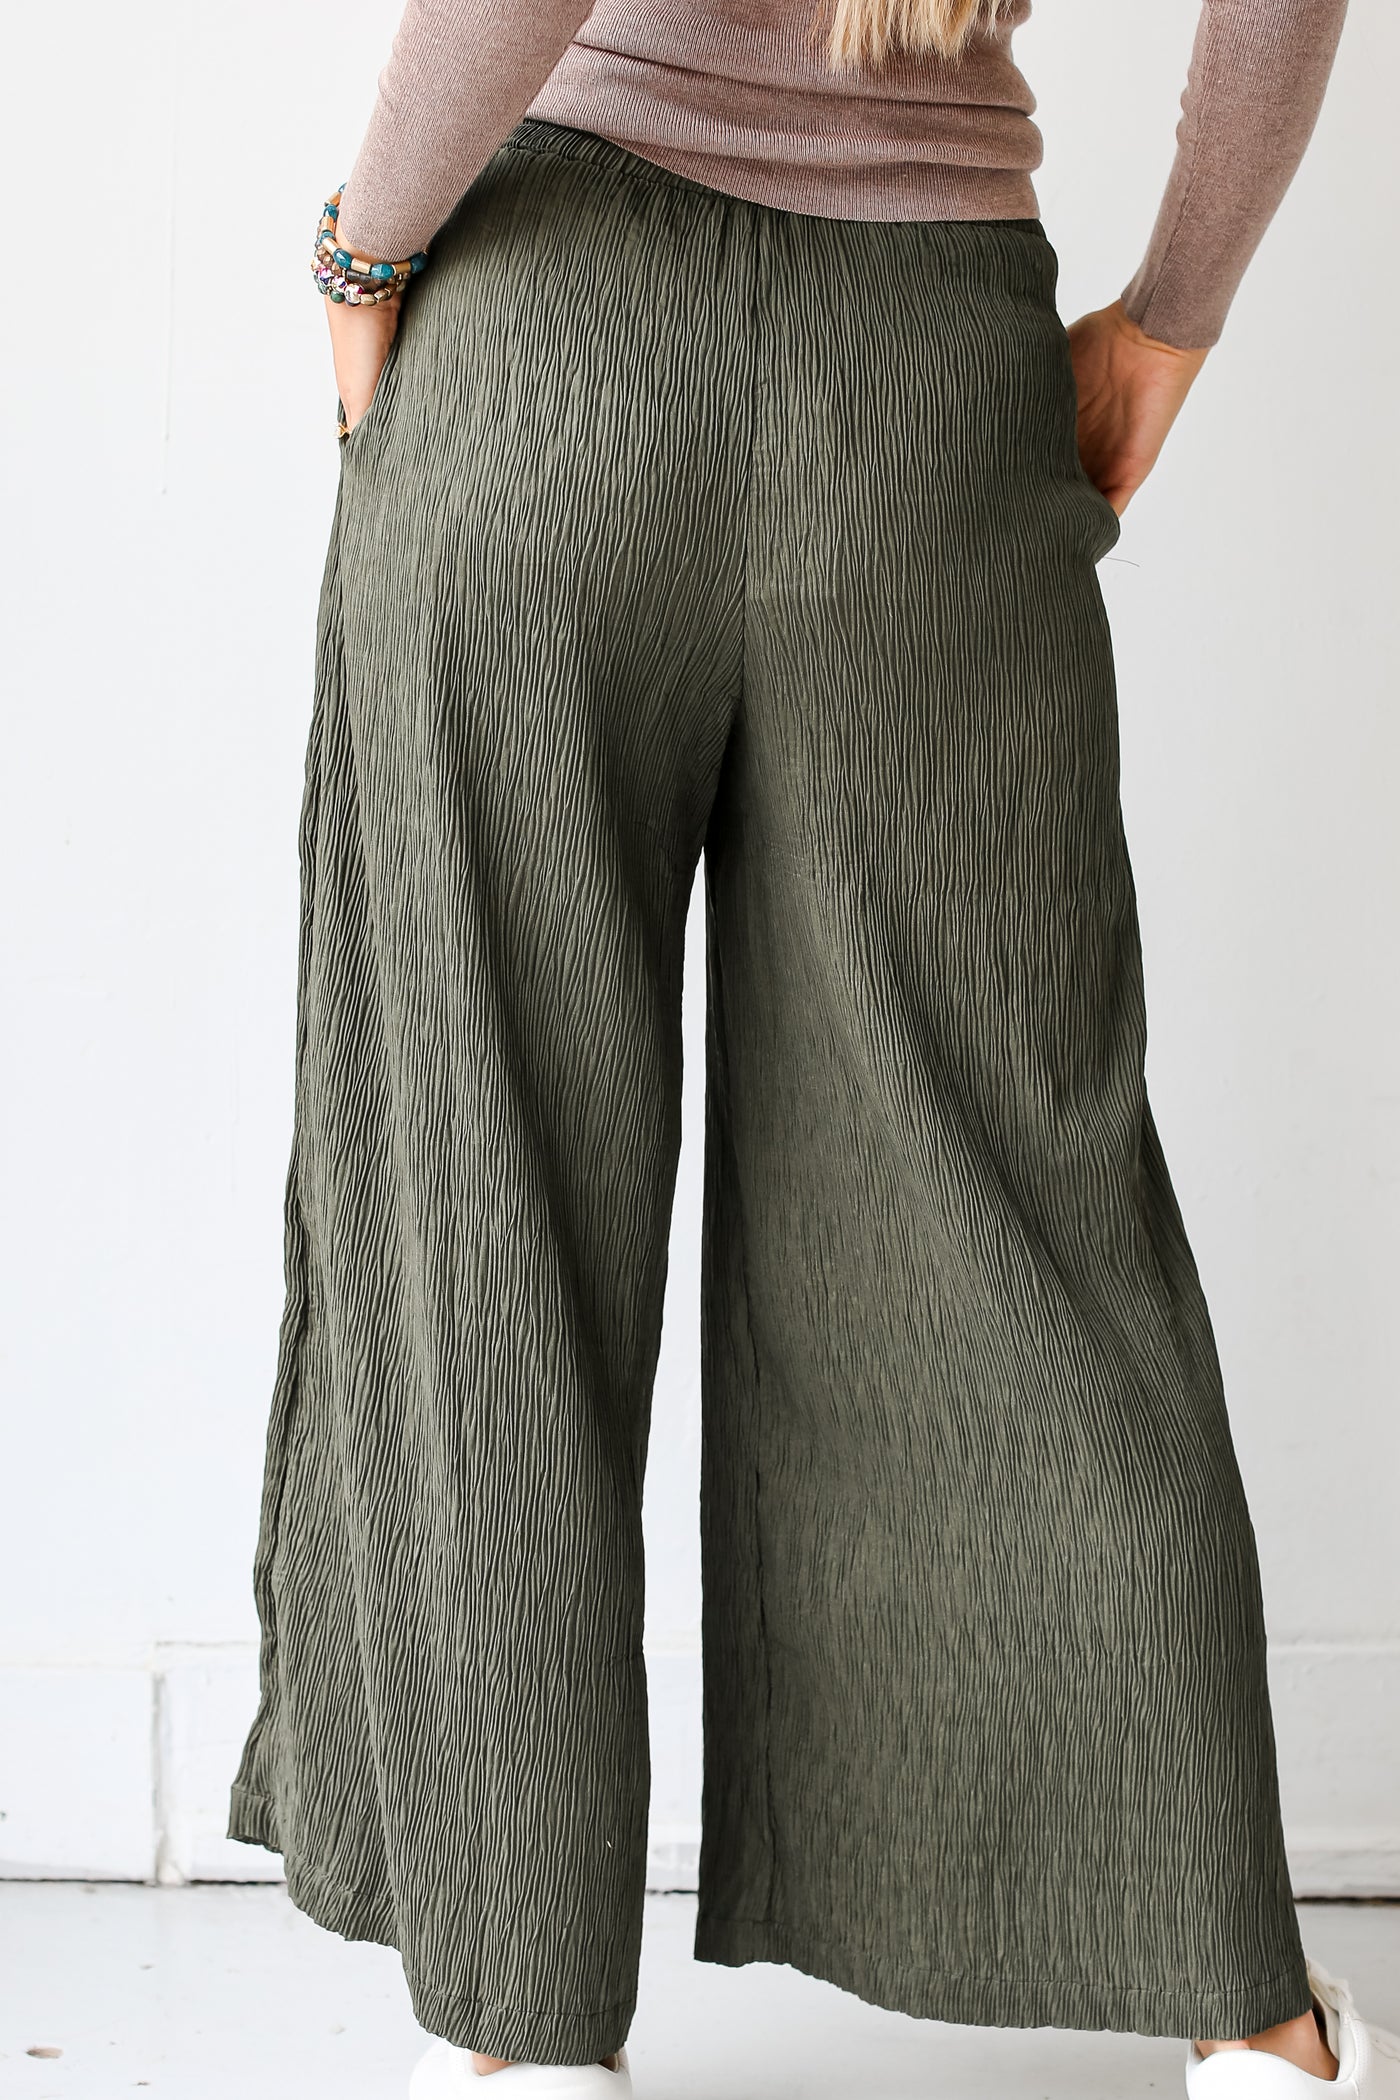 trendy pants for women